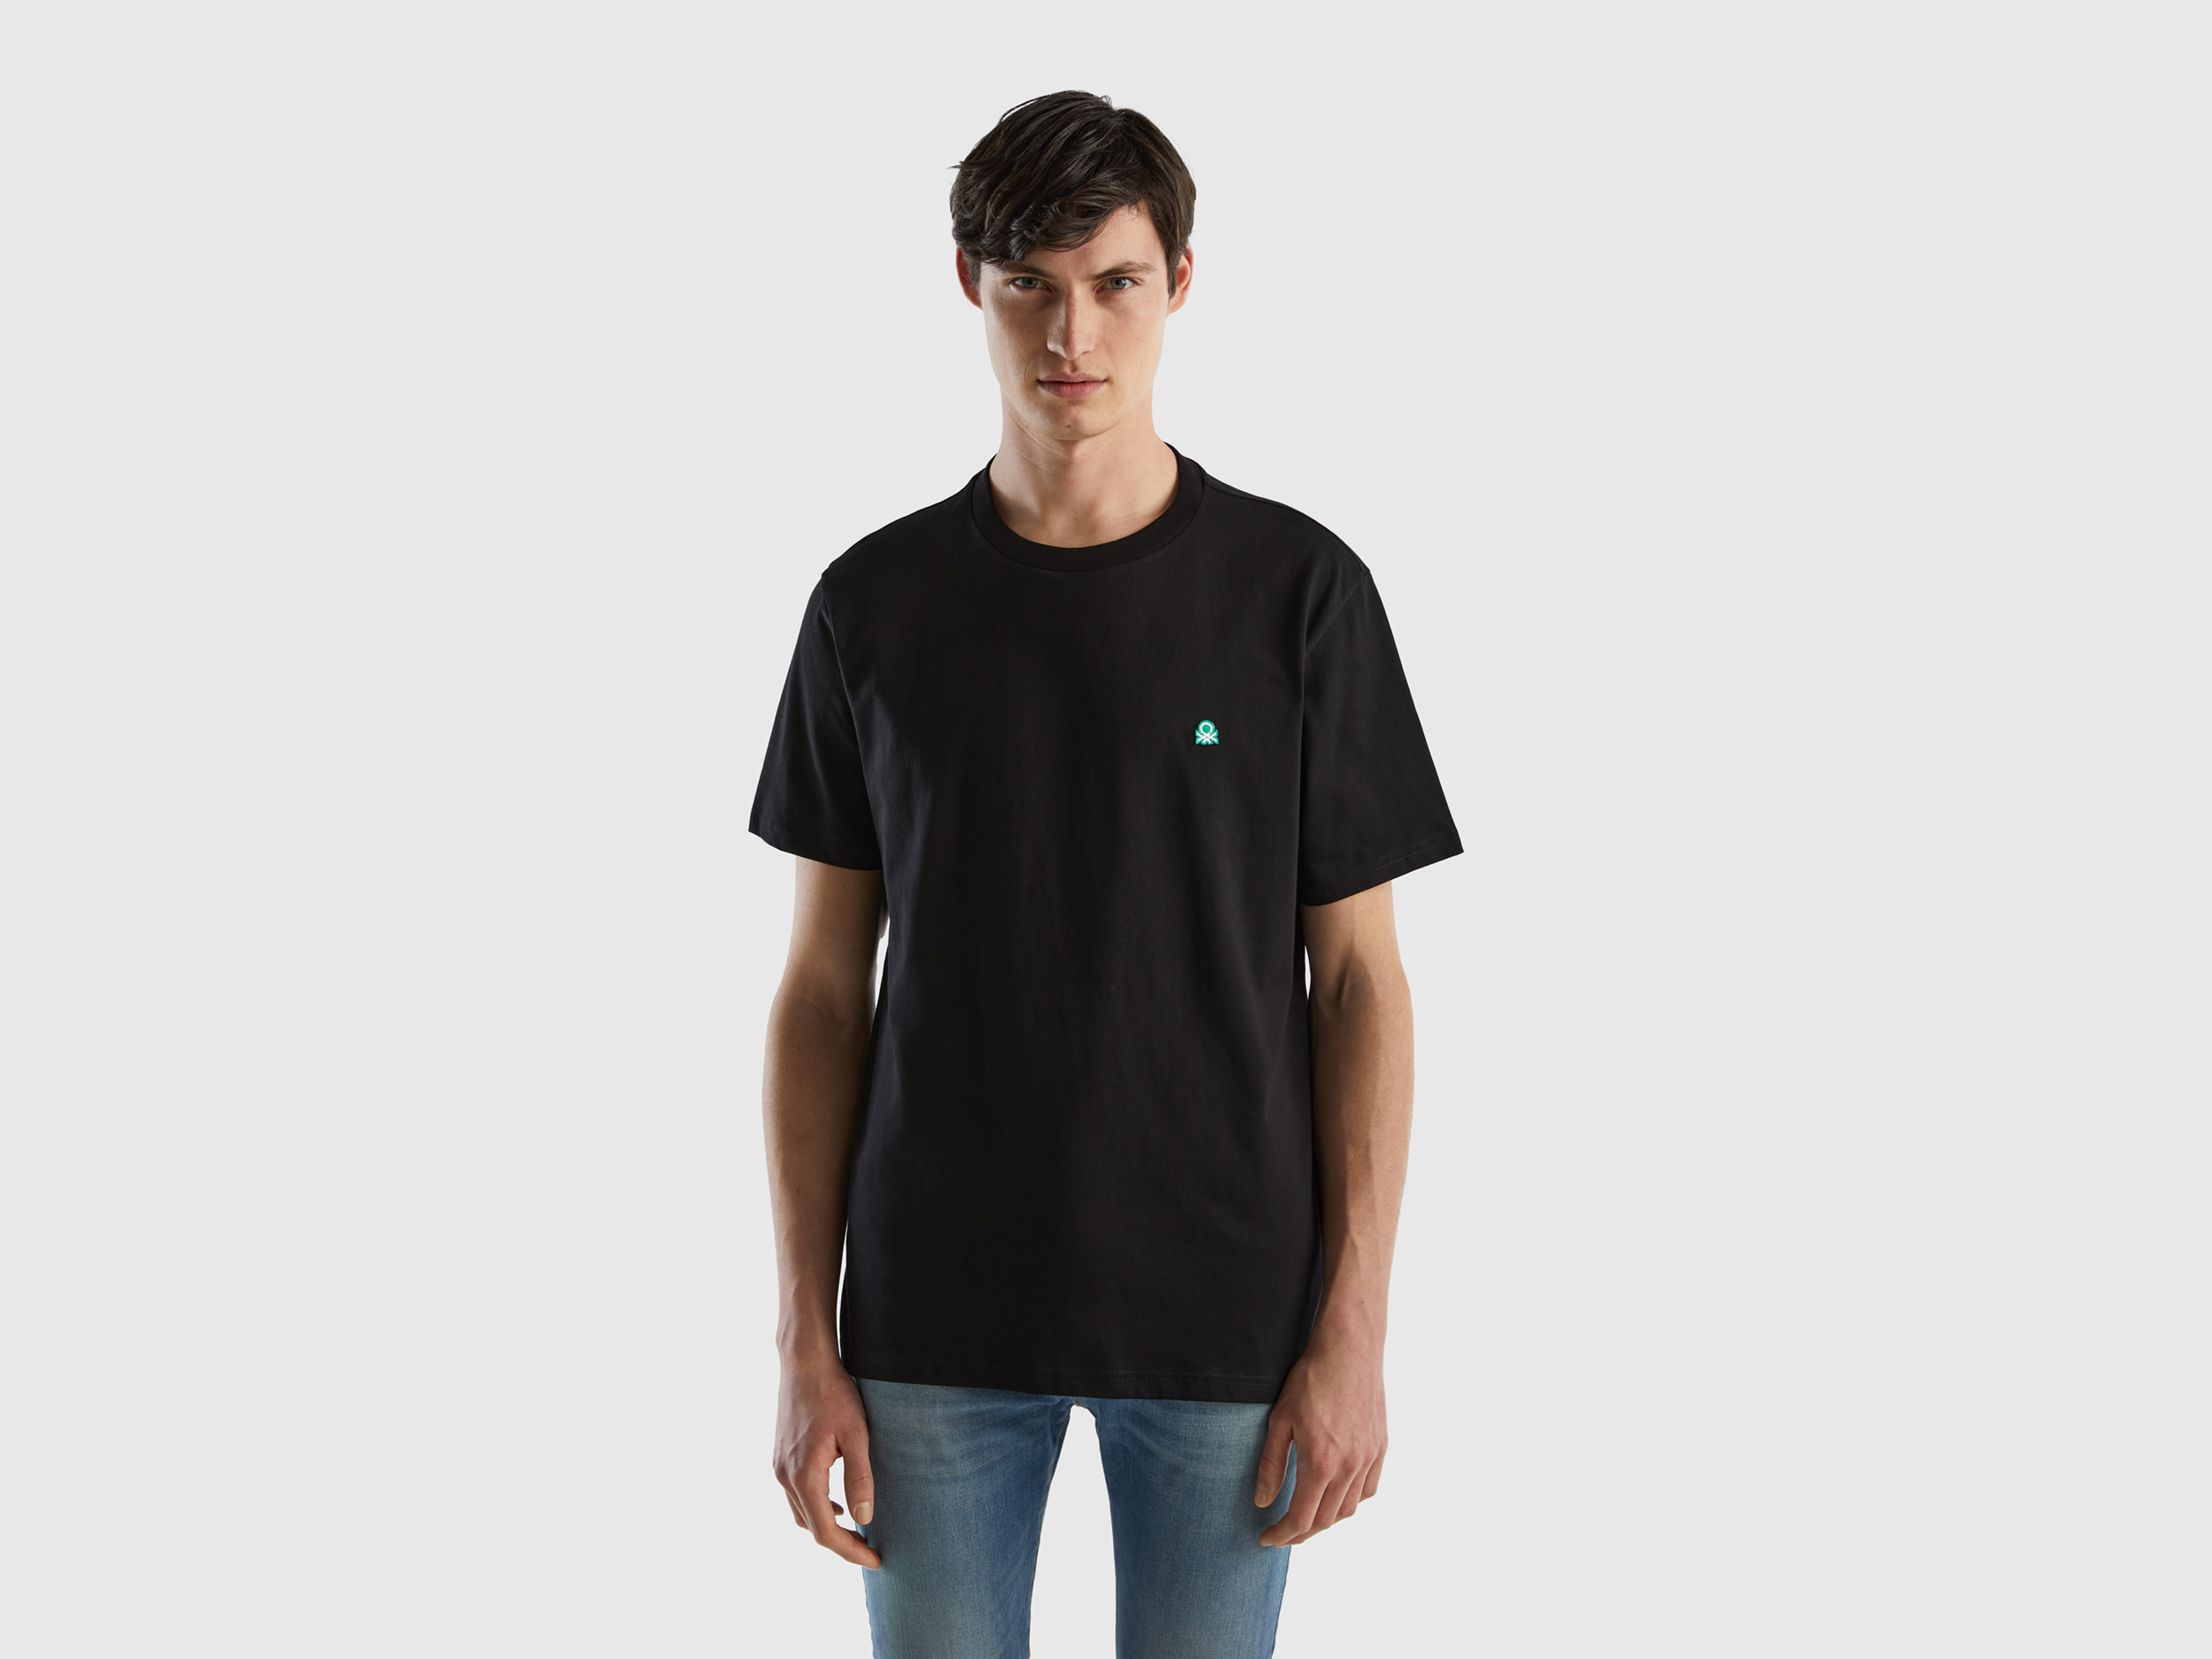 Benetton, 100% Organic Cotton Basic T-shirt, size M, Black, Men